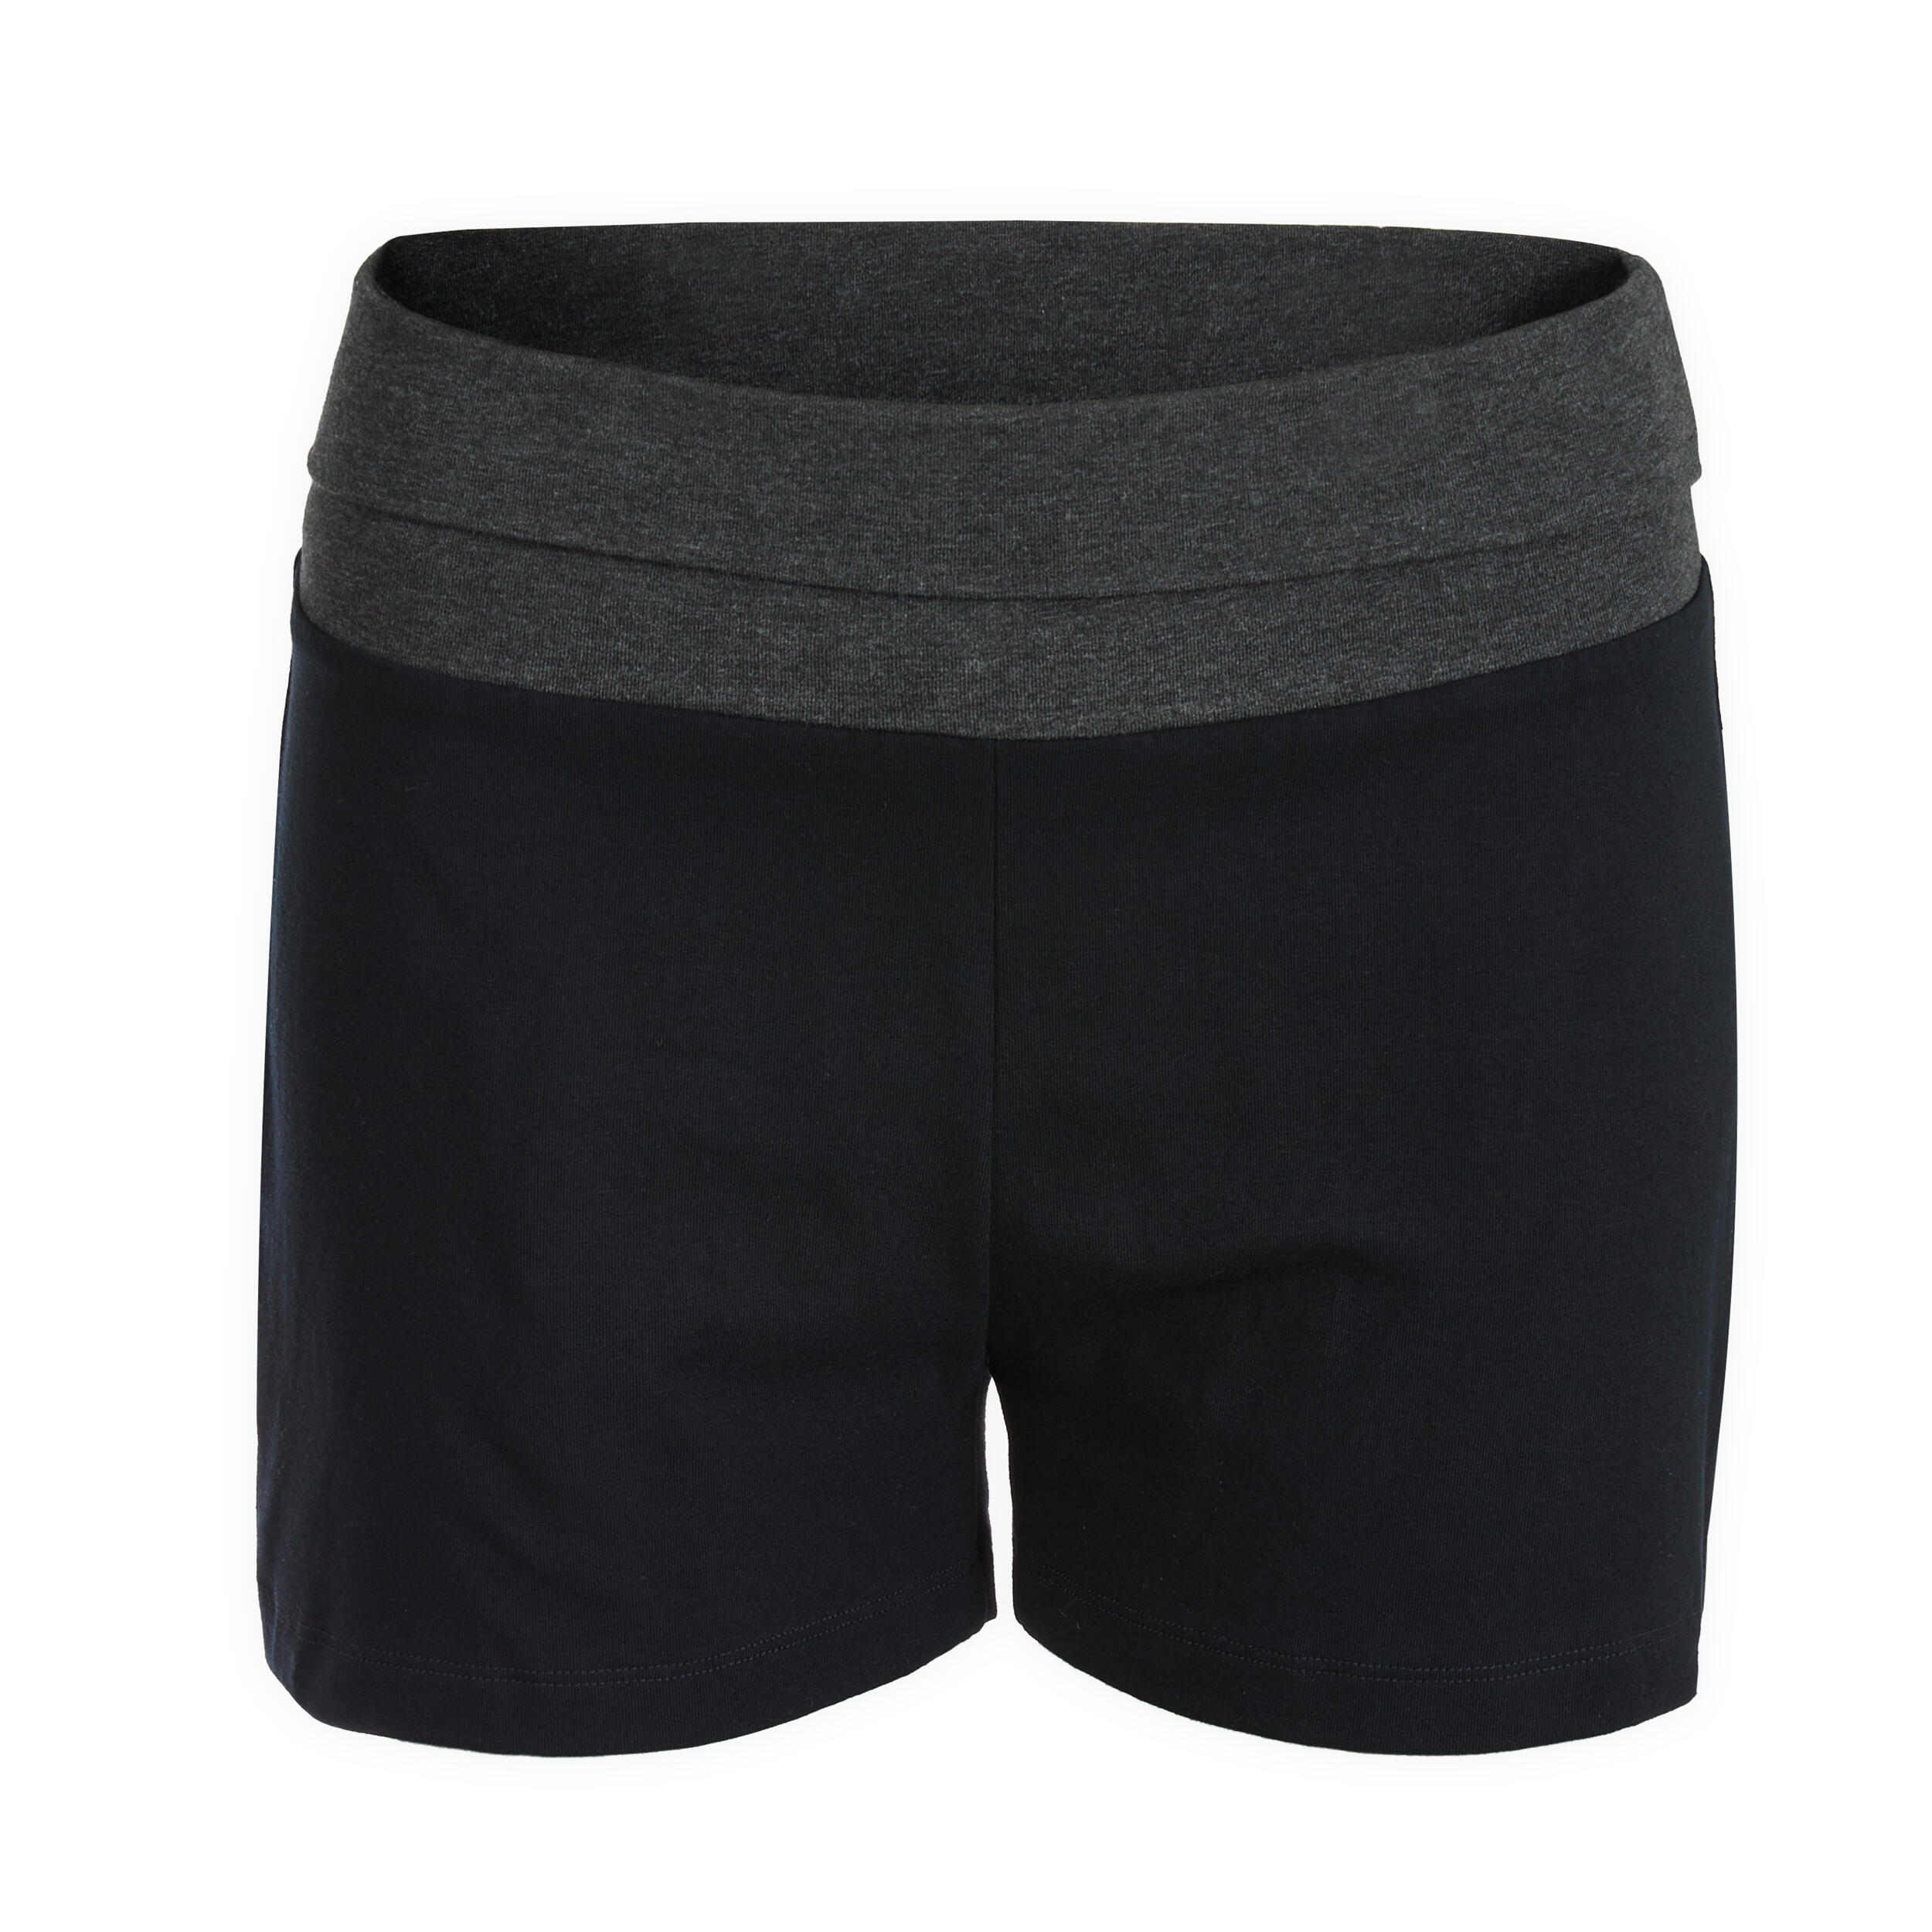 Yoga ShortsTight Under Dress Shorts Innerwear Tights Shorts for Girls or  womens